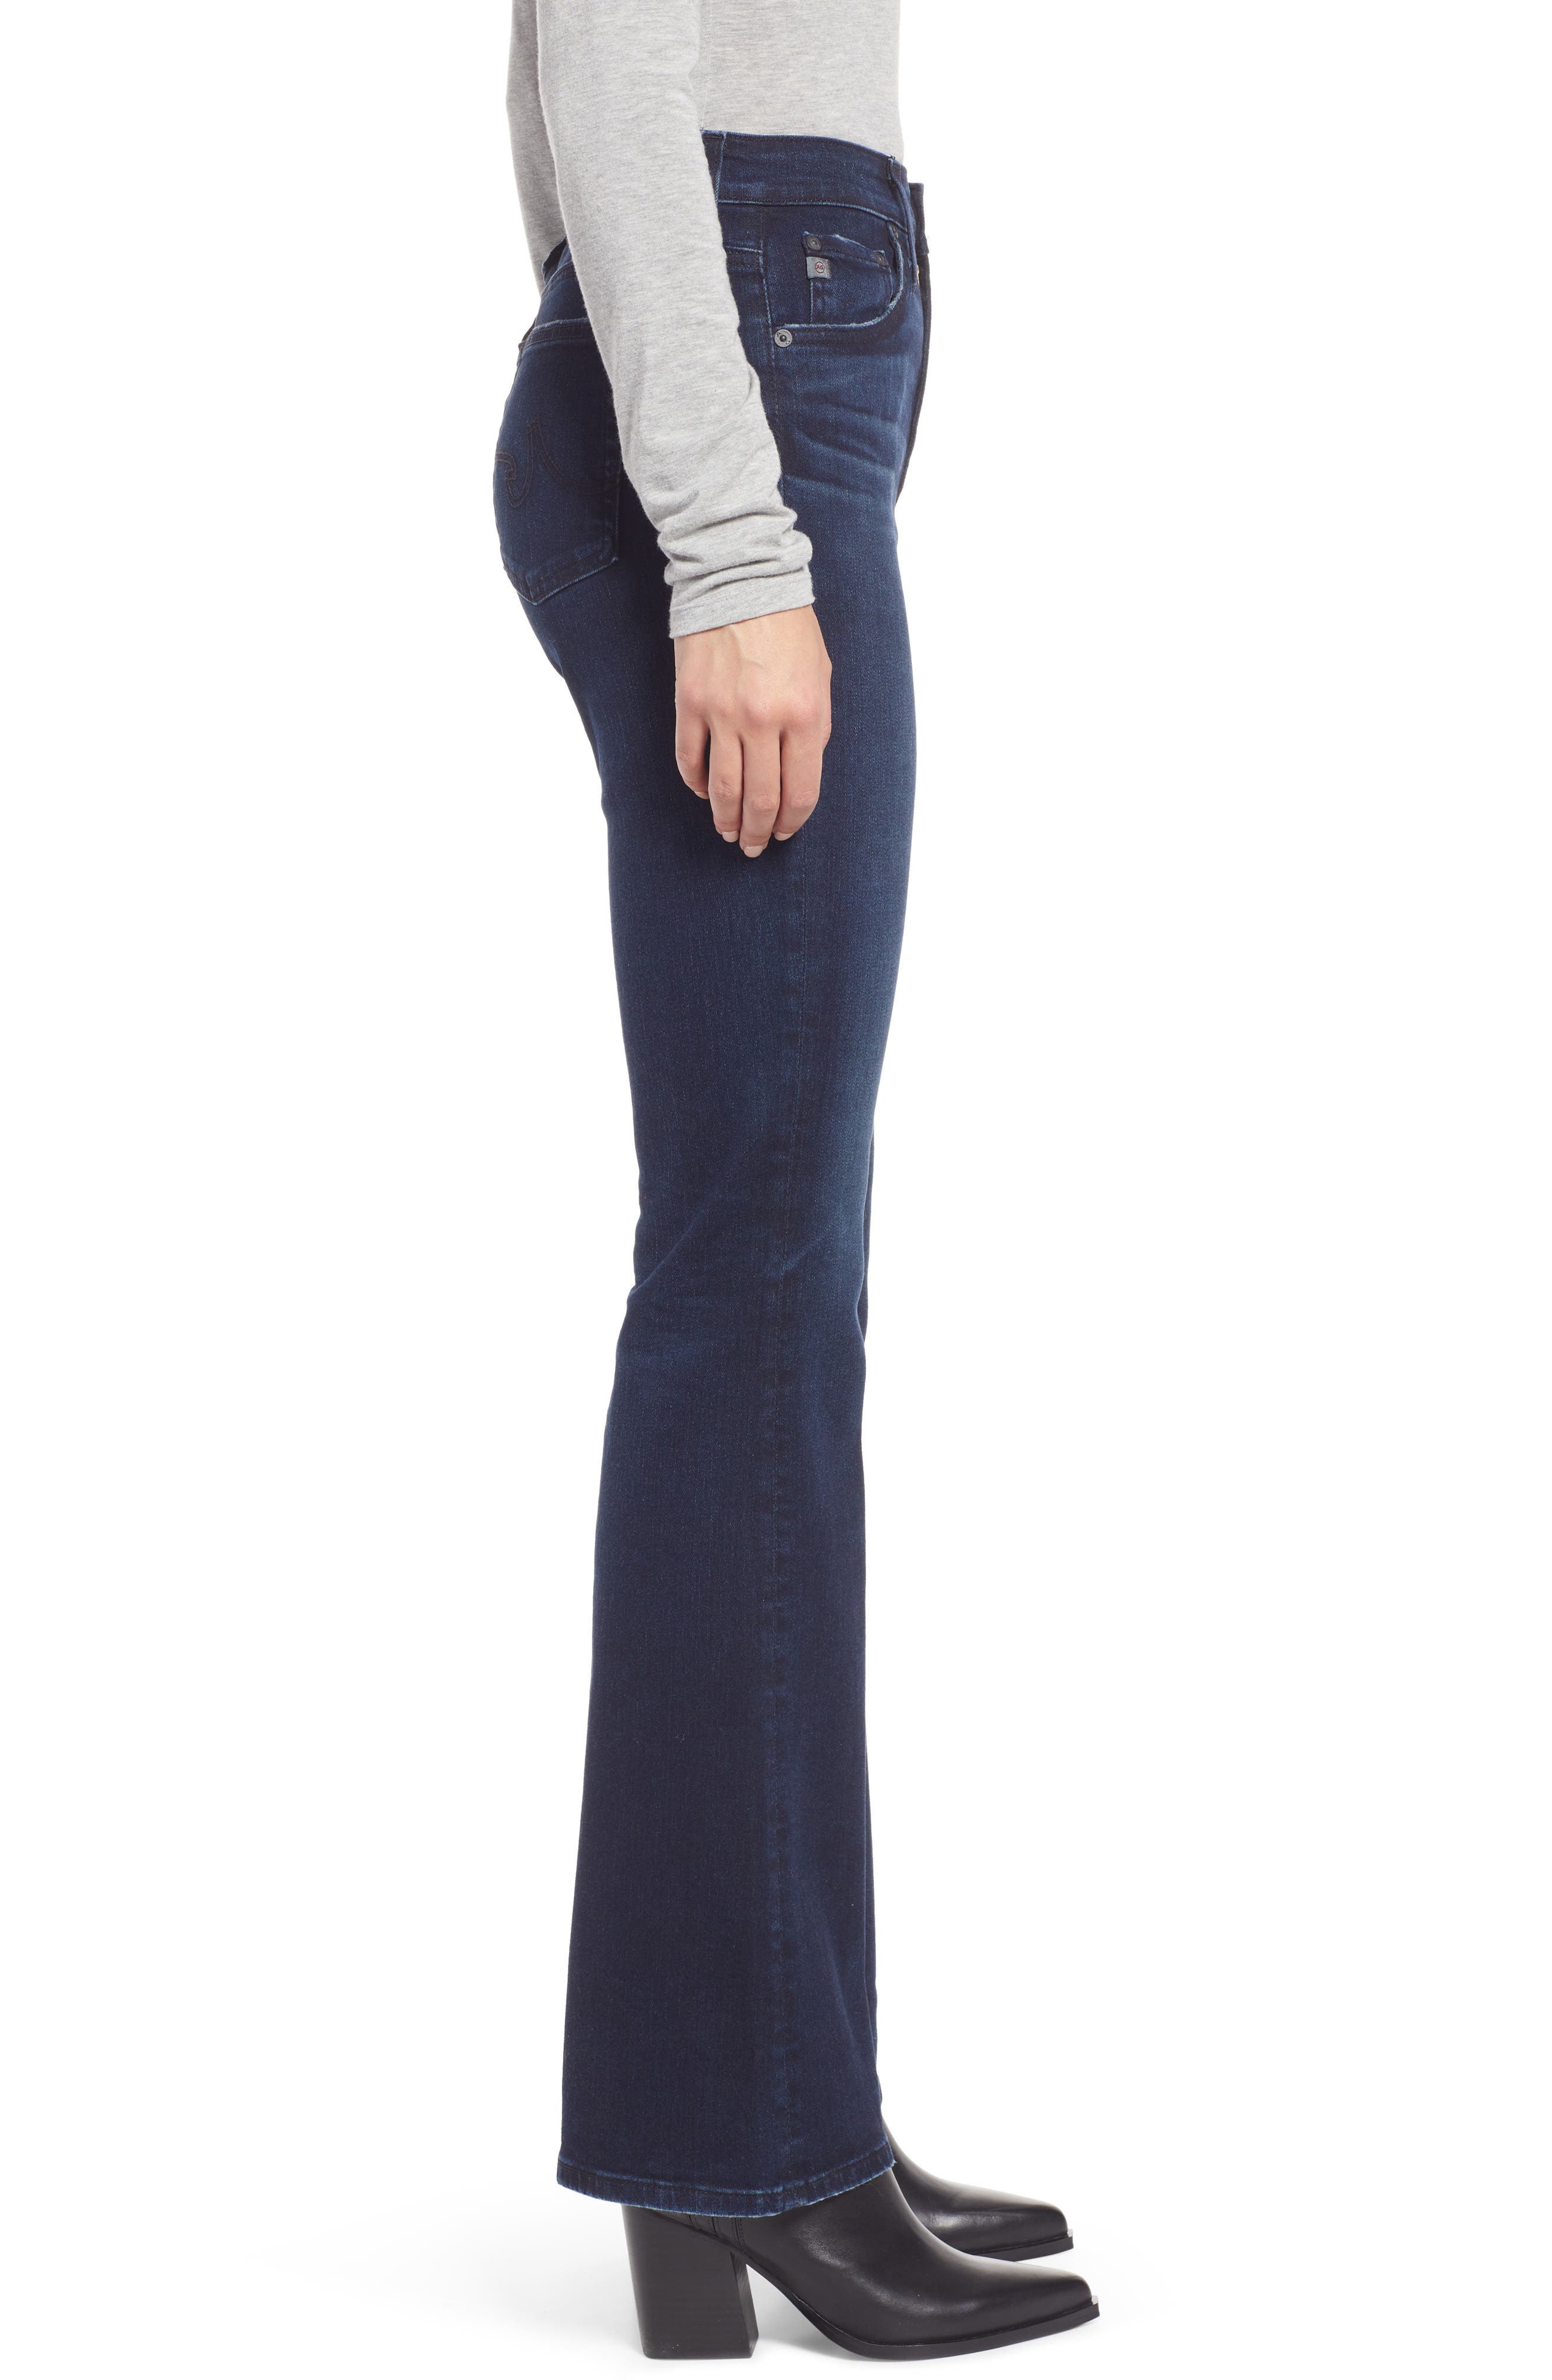 Women's High-Rise Skinny Jeans - Universal Thread Sulphur 2